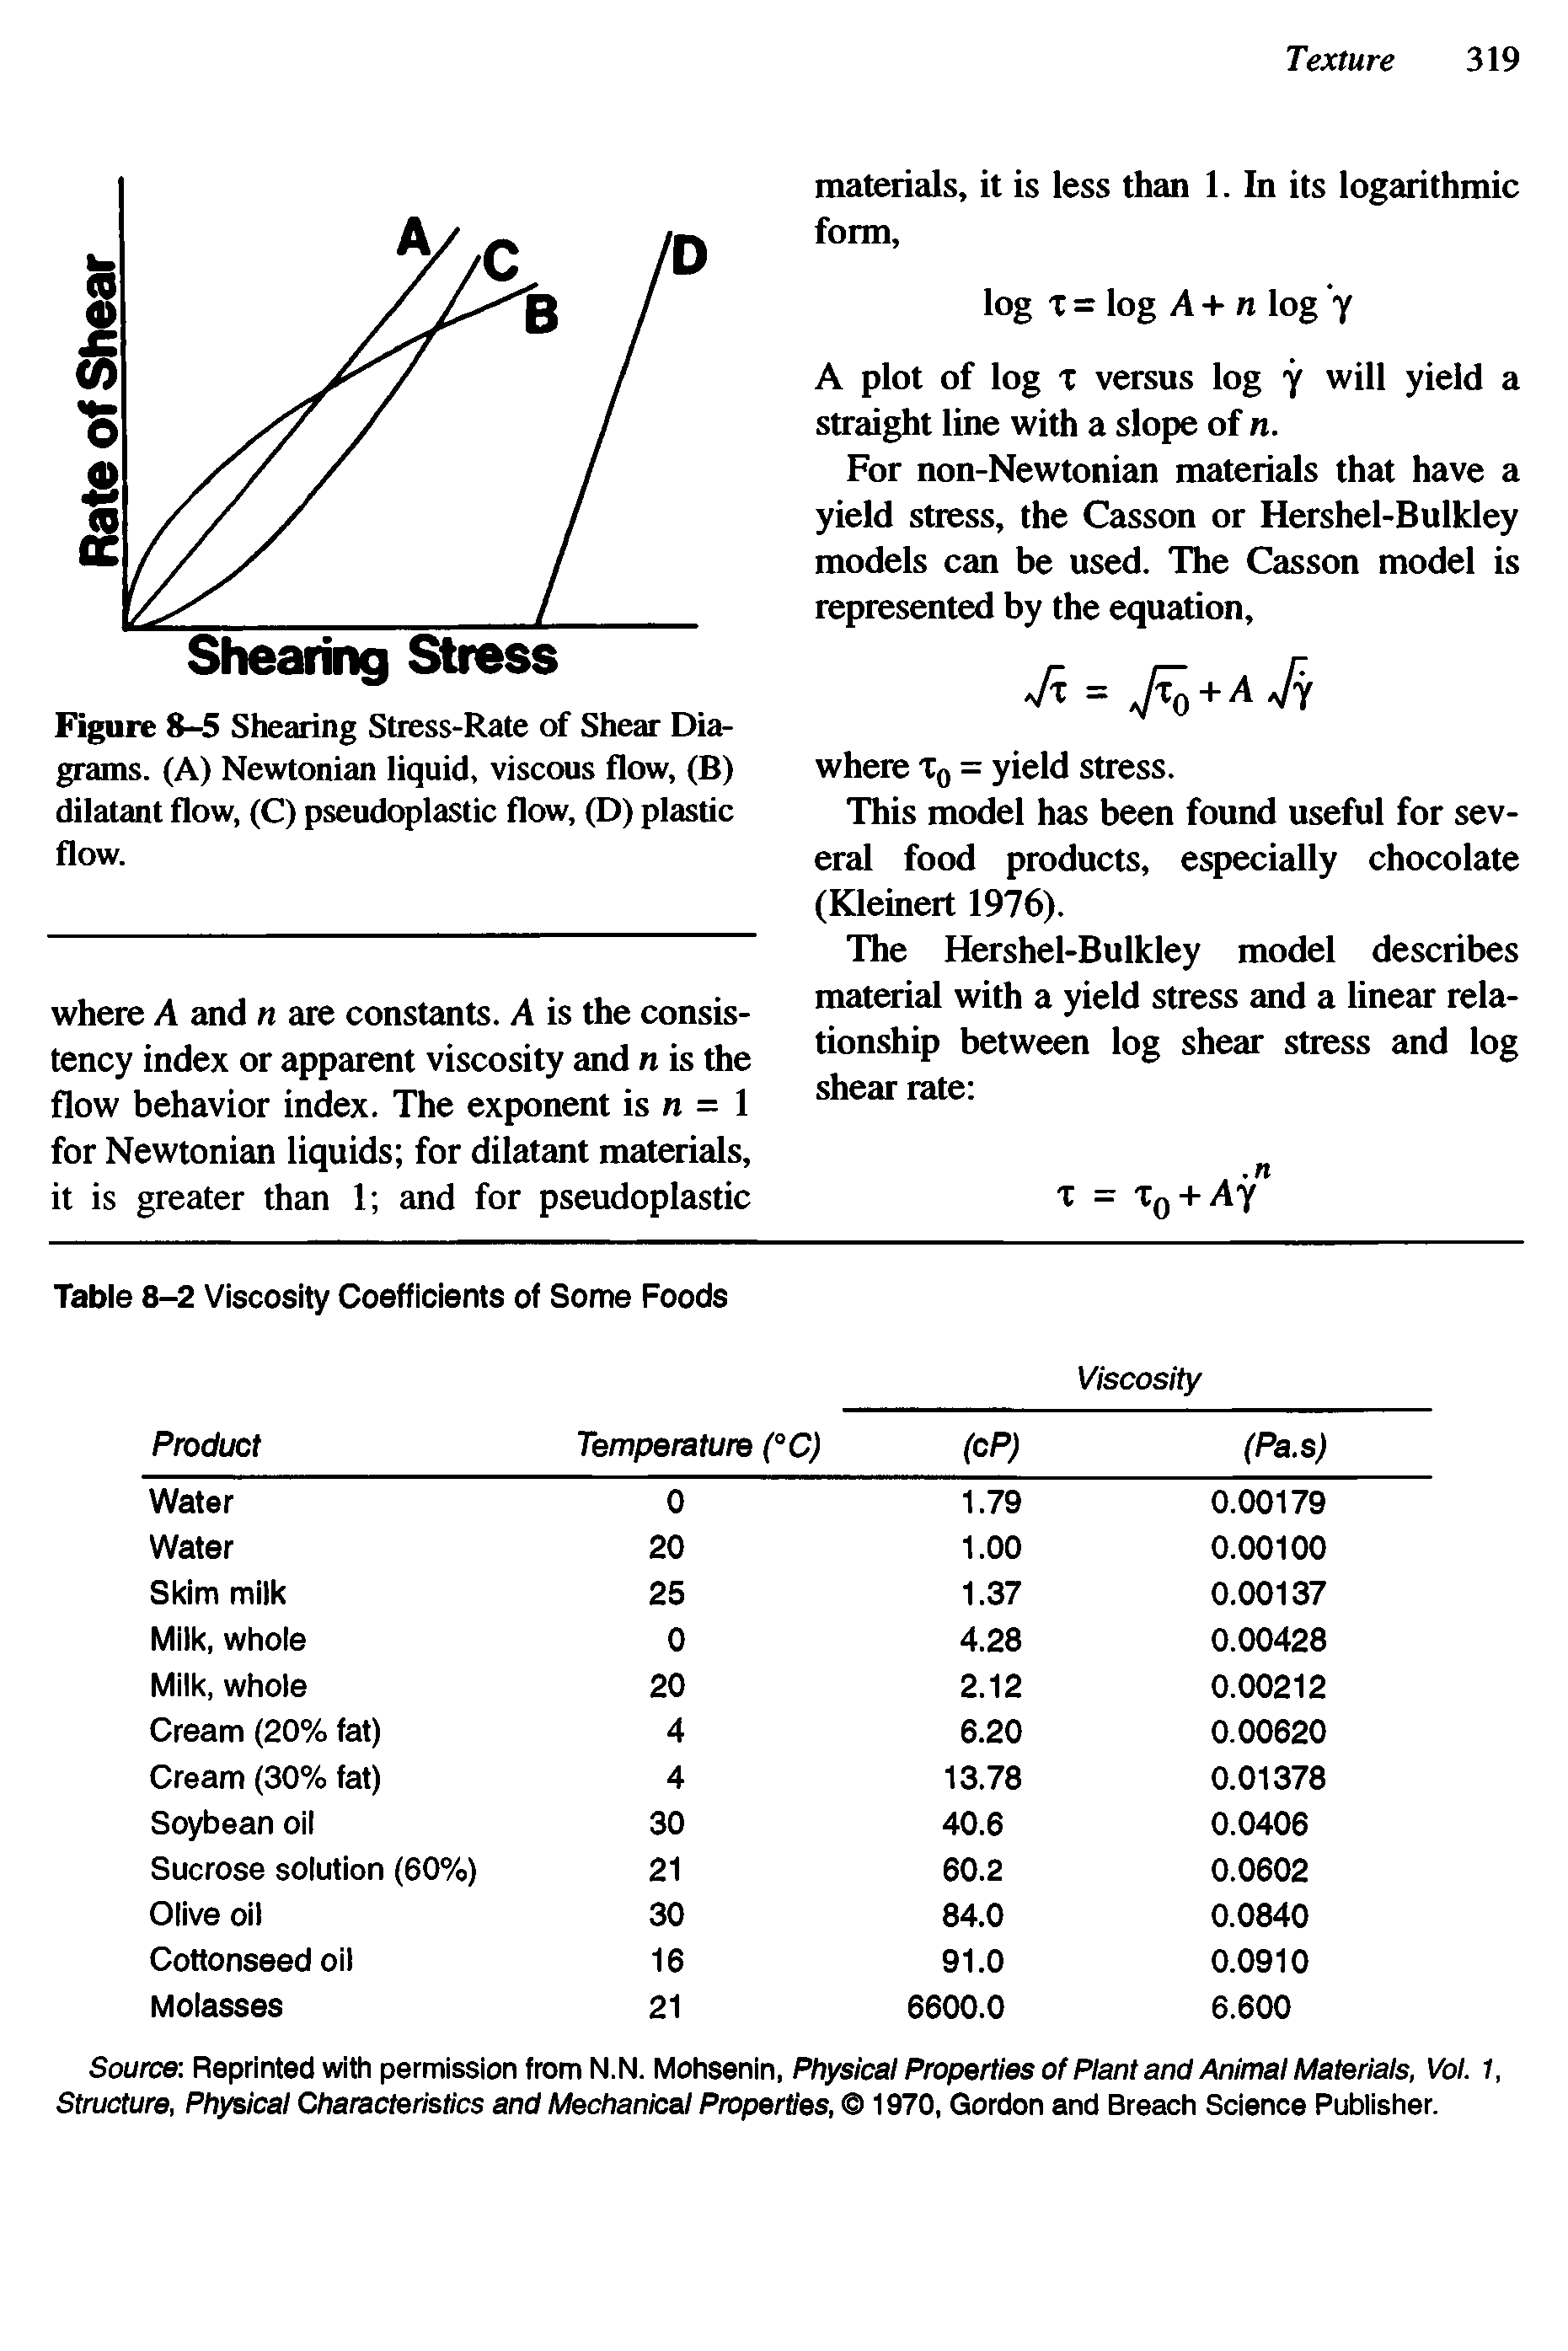 Figure 8-5 Shearing Stress-Rate of Shear Diagrams. (A) Newtonian liquid, viscous flow, (B) dilatant flow, (C) pseudoplastic flow, (D) plastic flow.